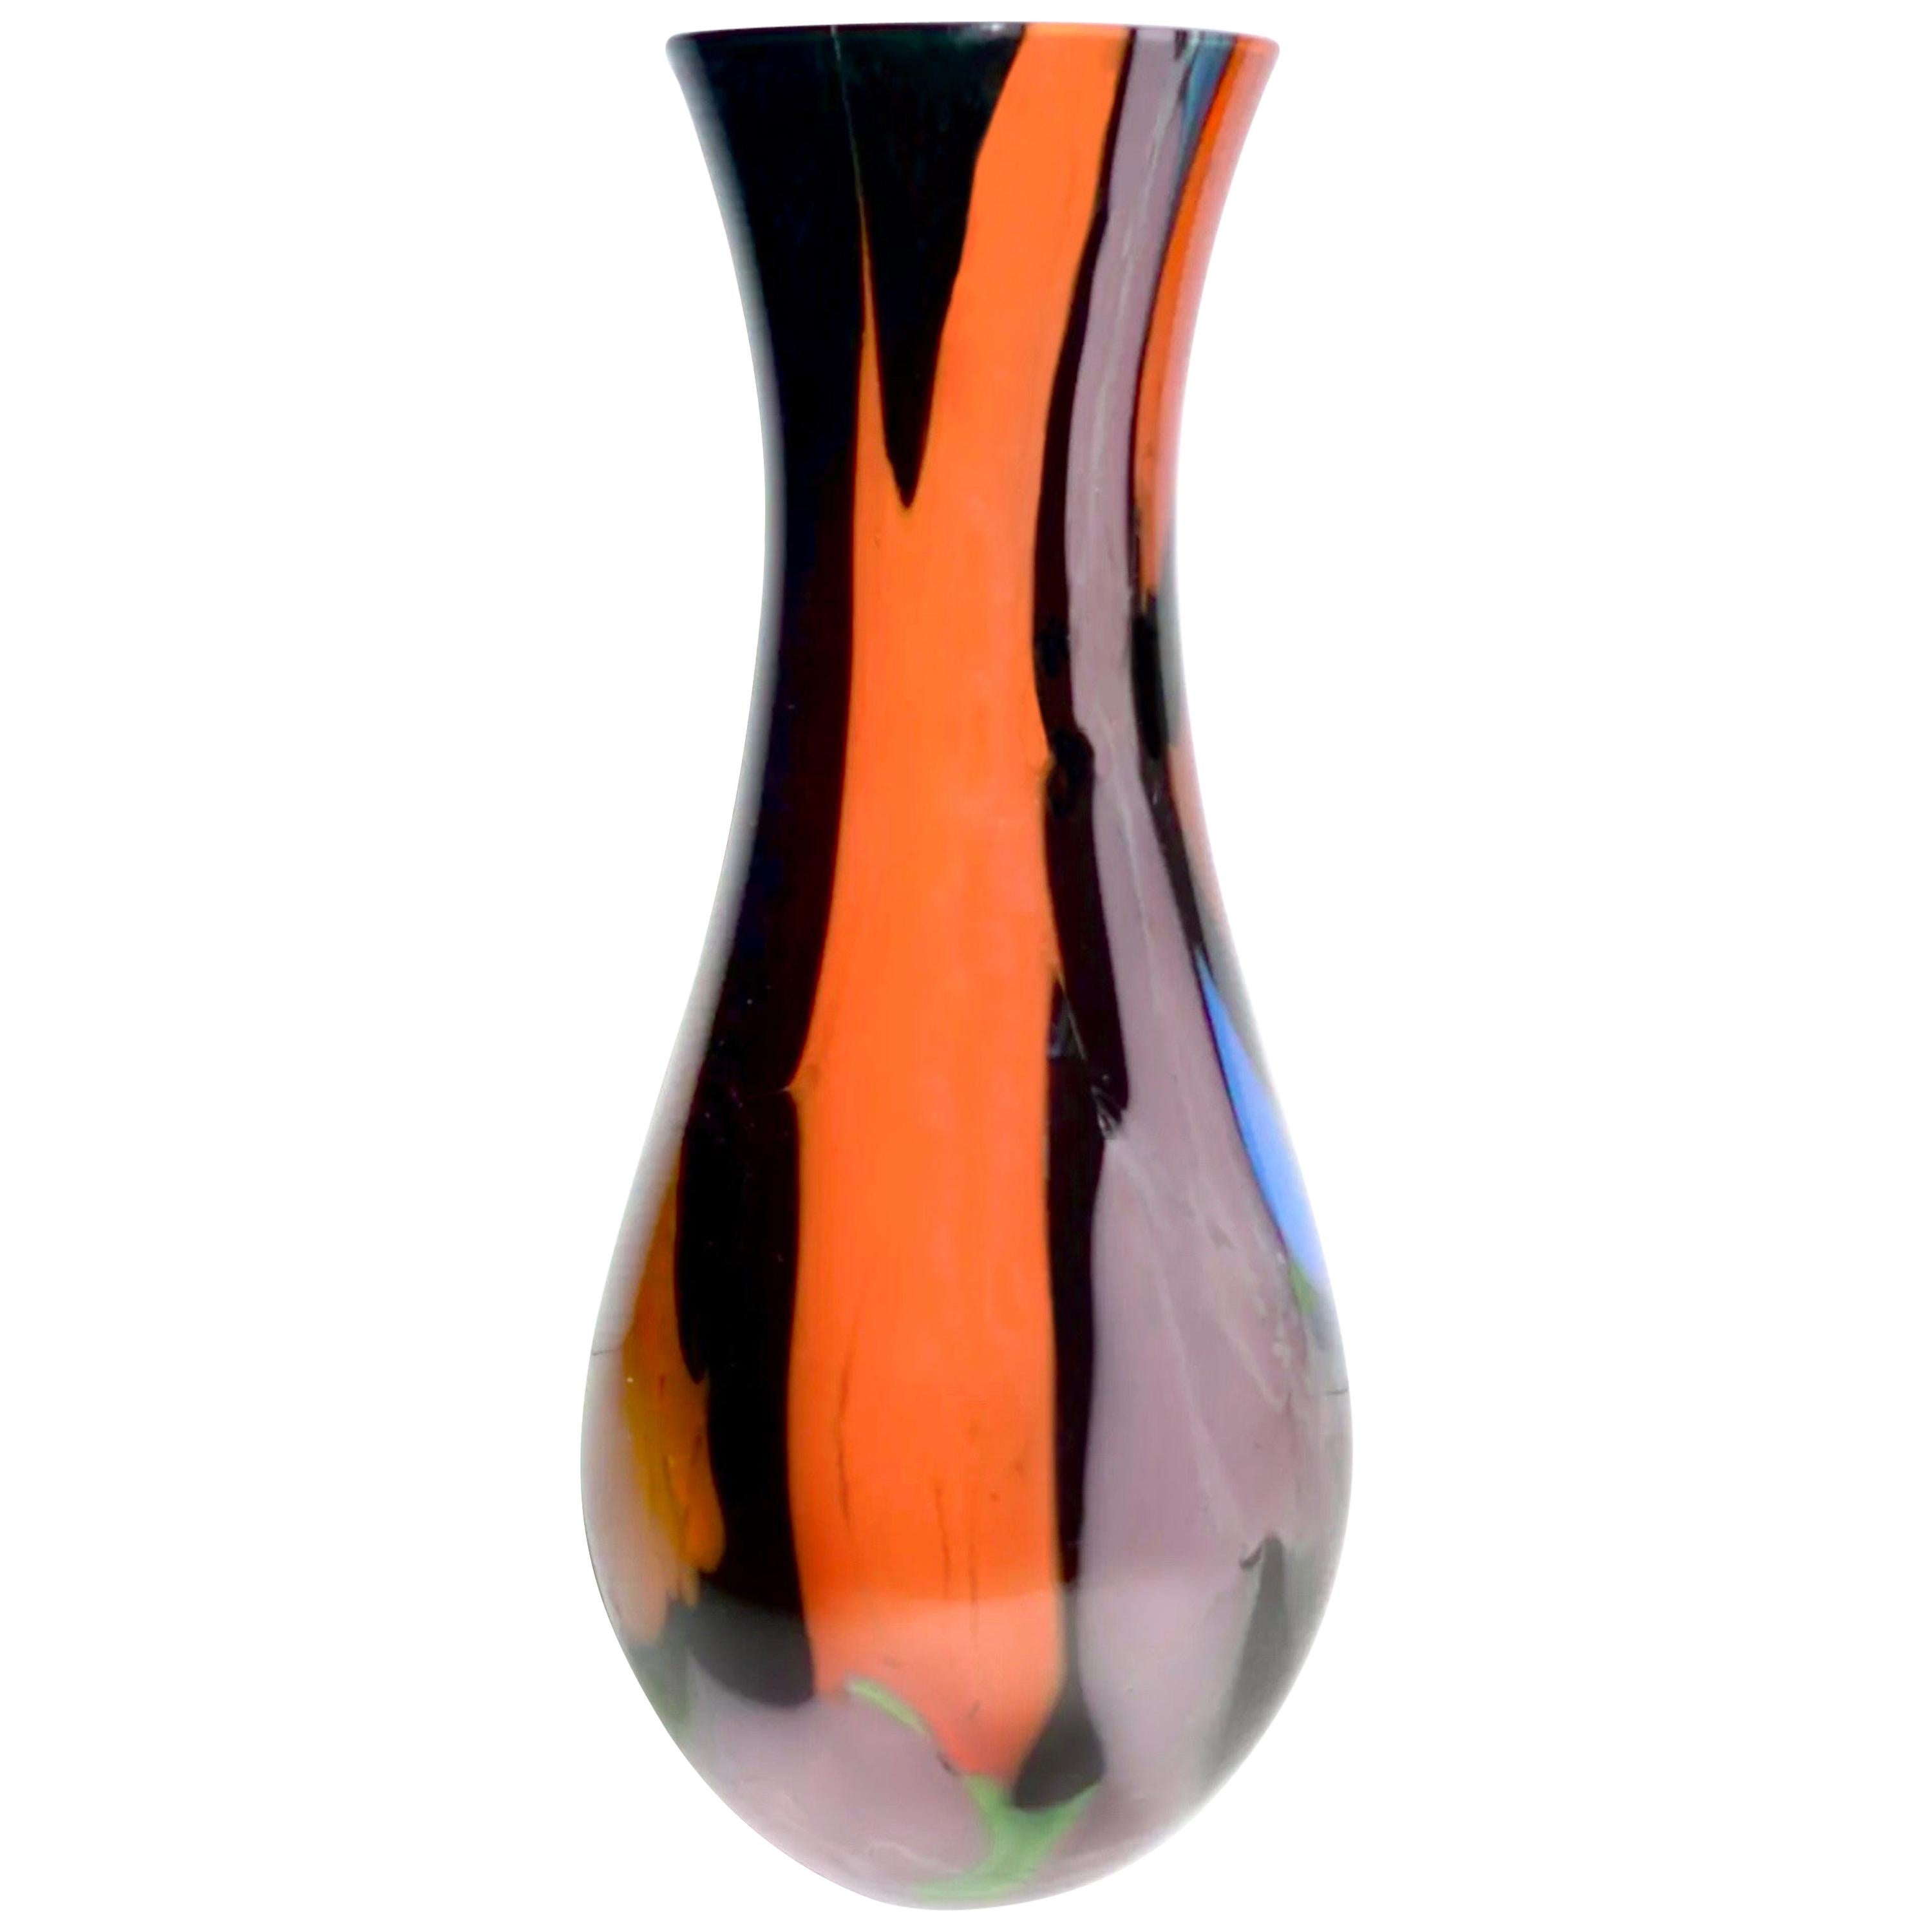 Vintage Murano Art Glass Signed Seguso Multicolored Vase, Italian Midcentury